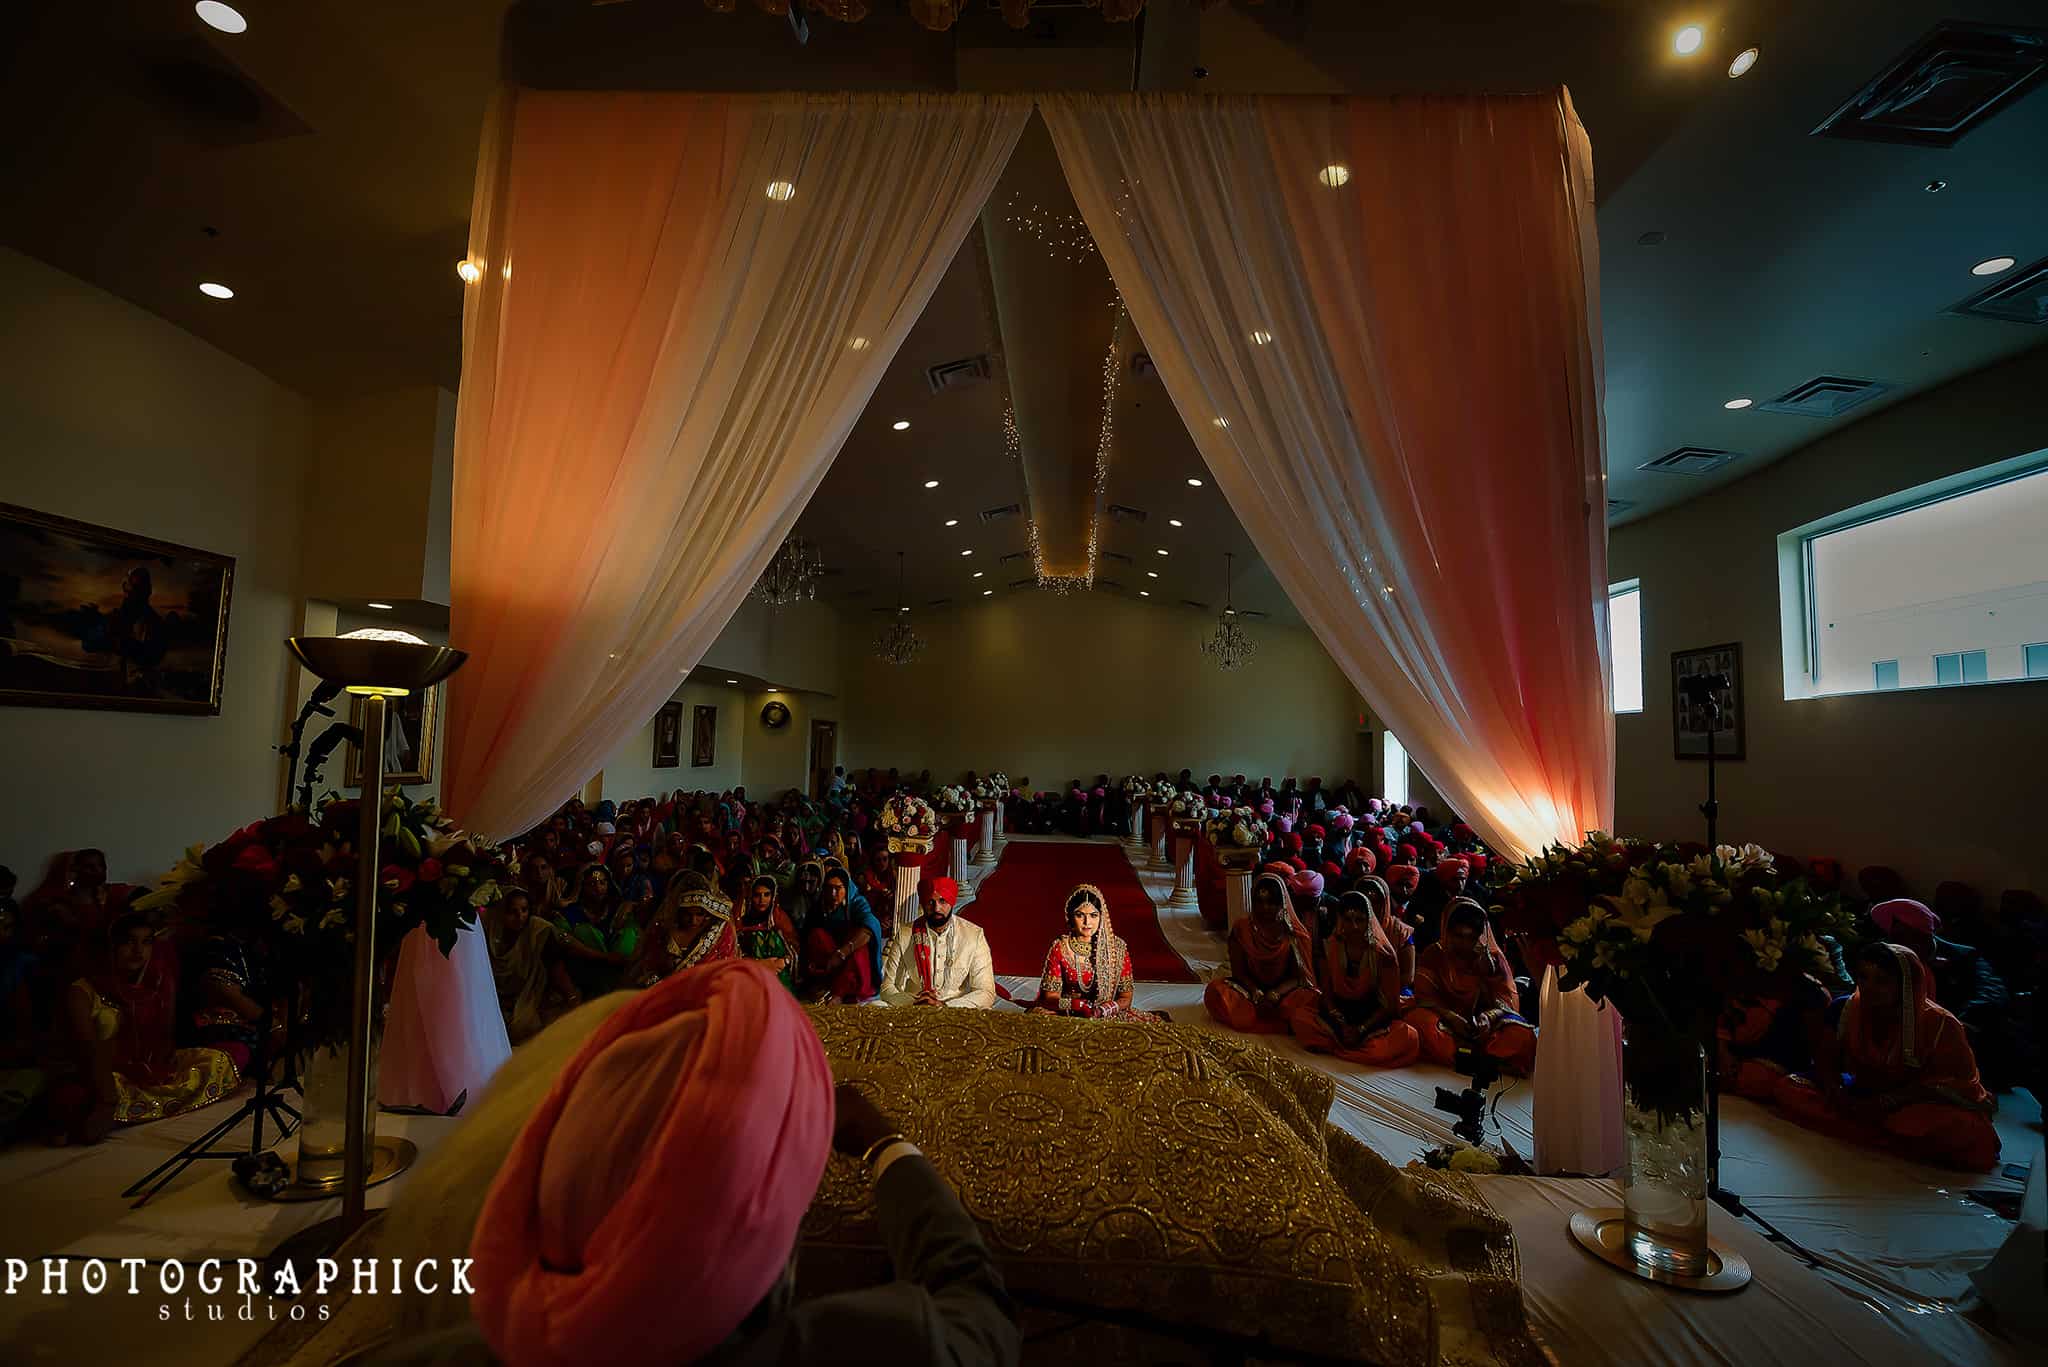 The Bellevue Indian Wedding, Poonam and Ballu: The Bellevue Indian Wedding